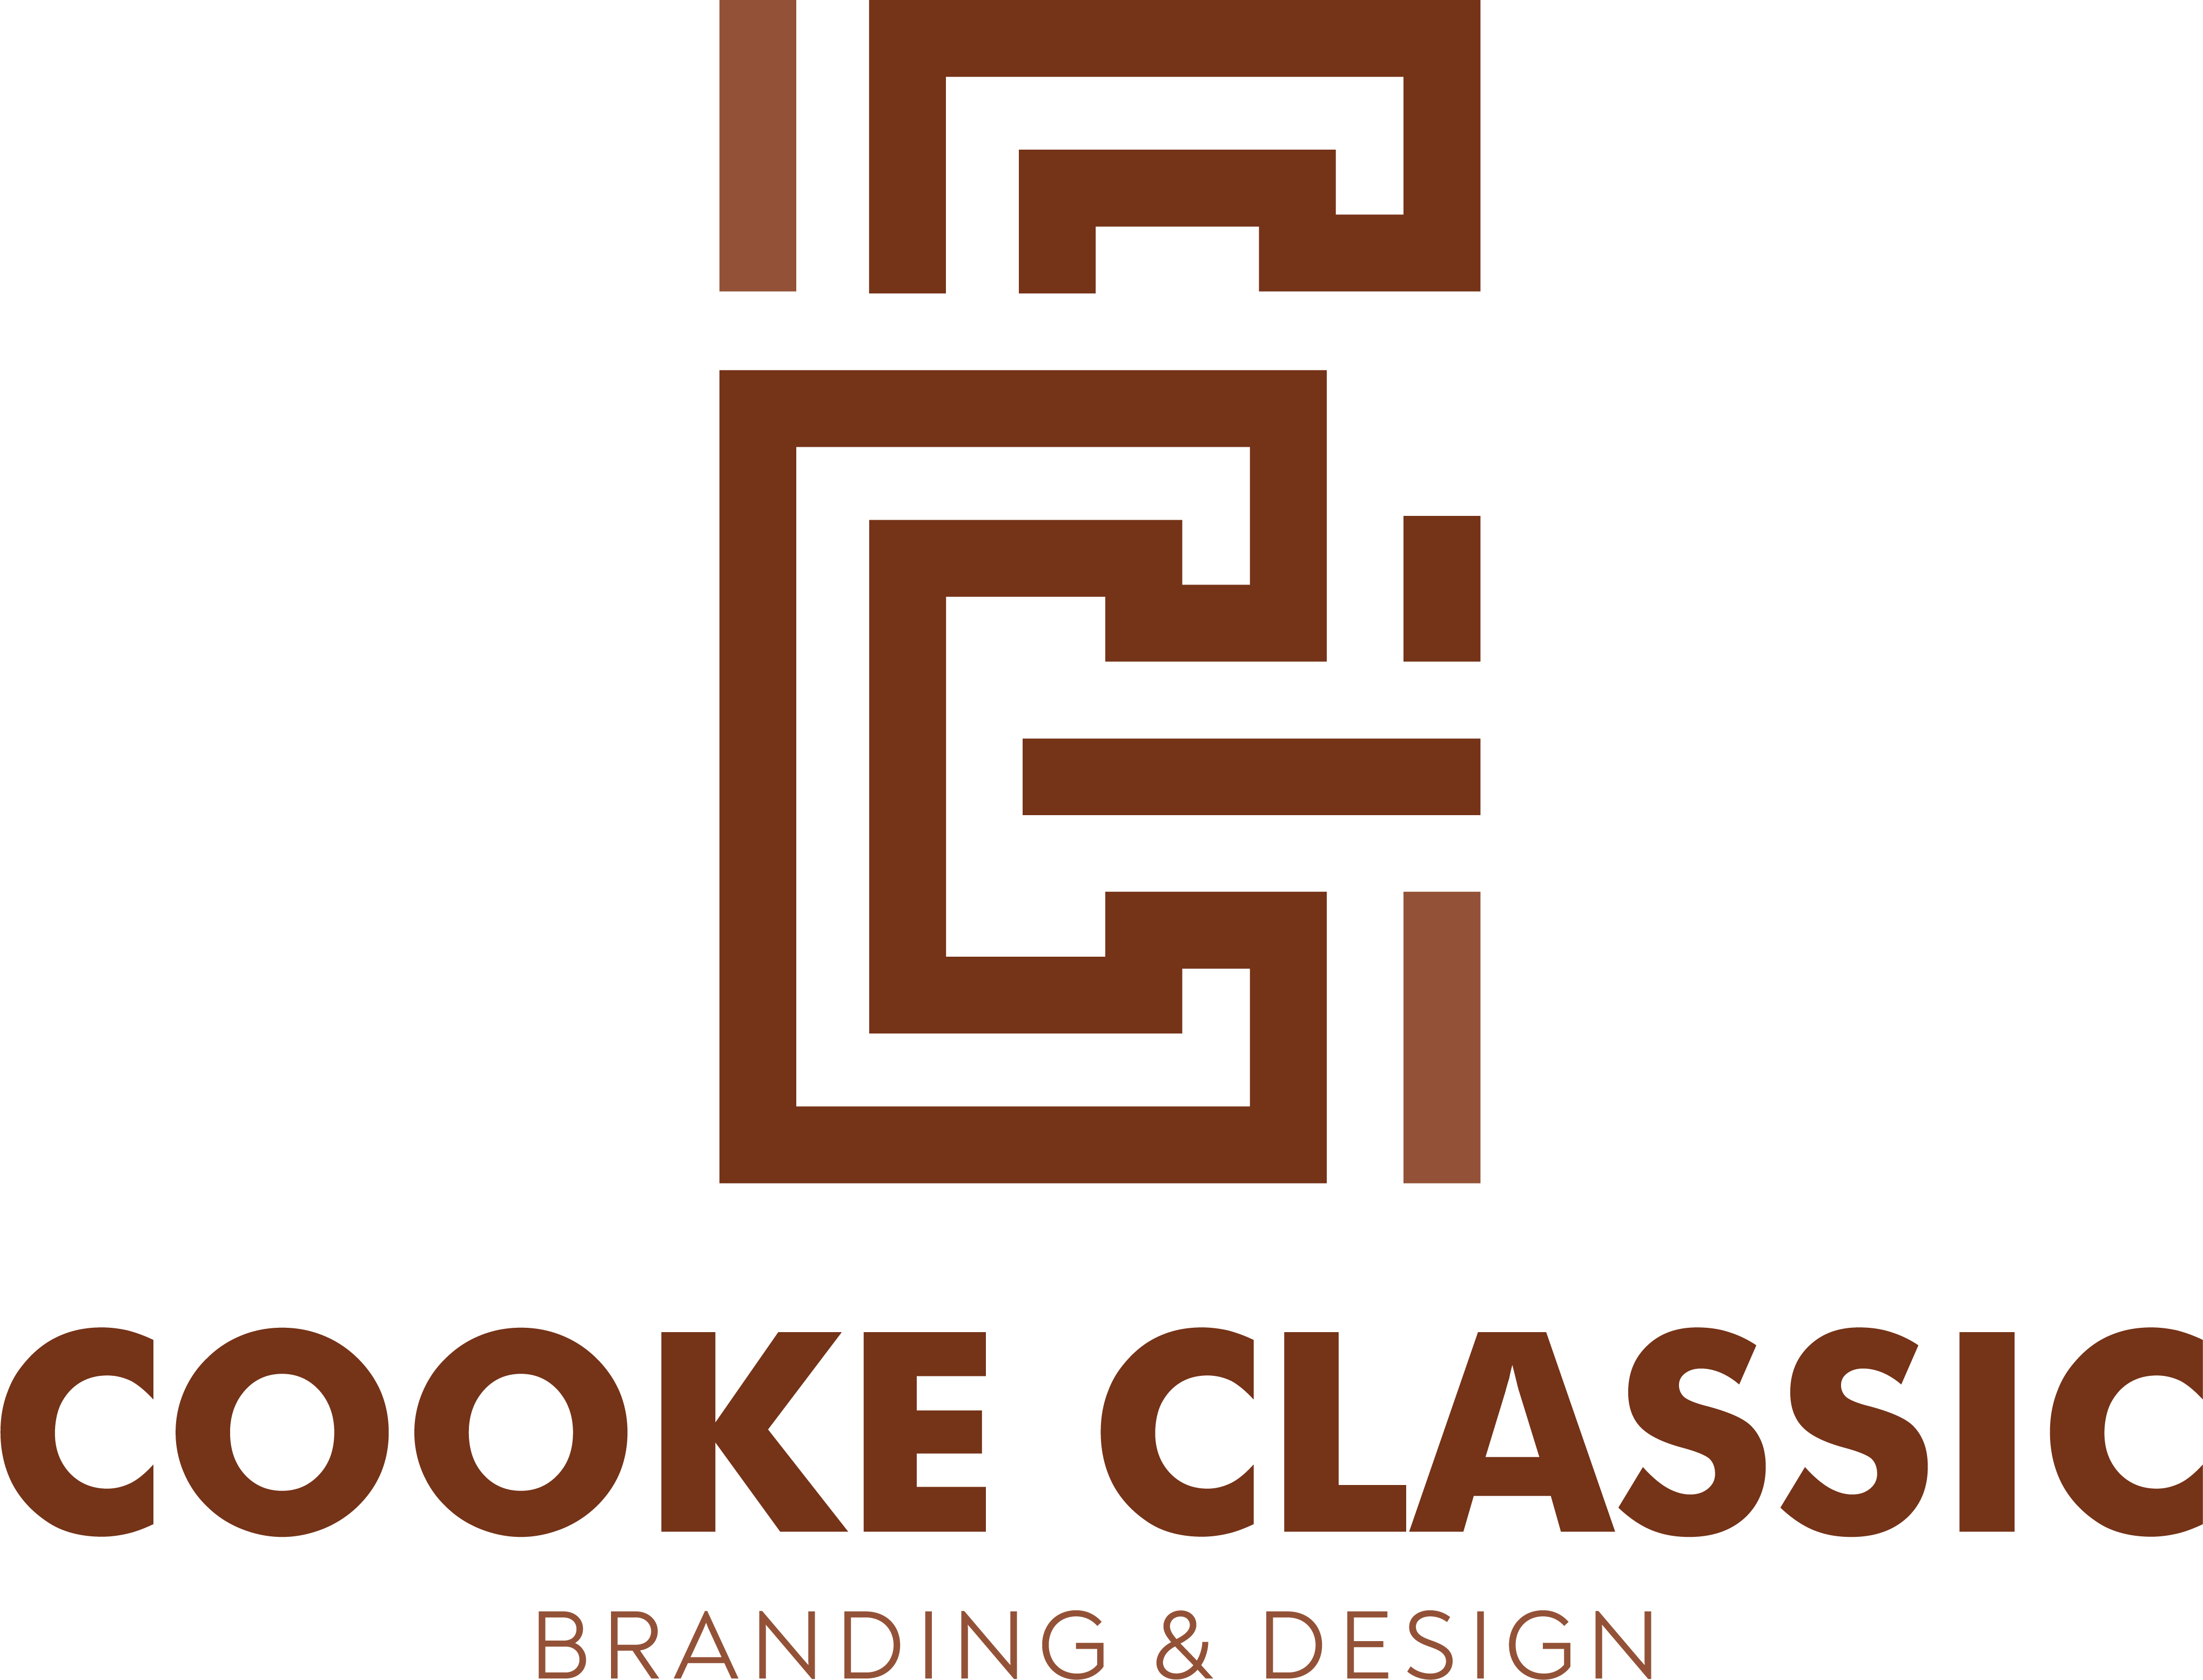 Cooke Classic Branding & Design